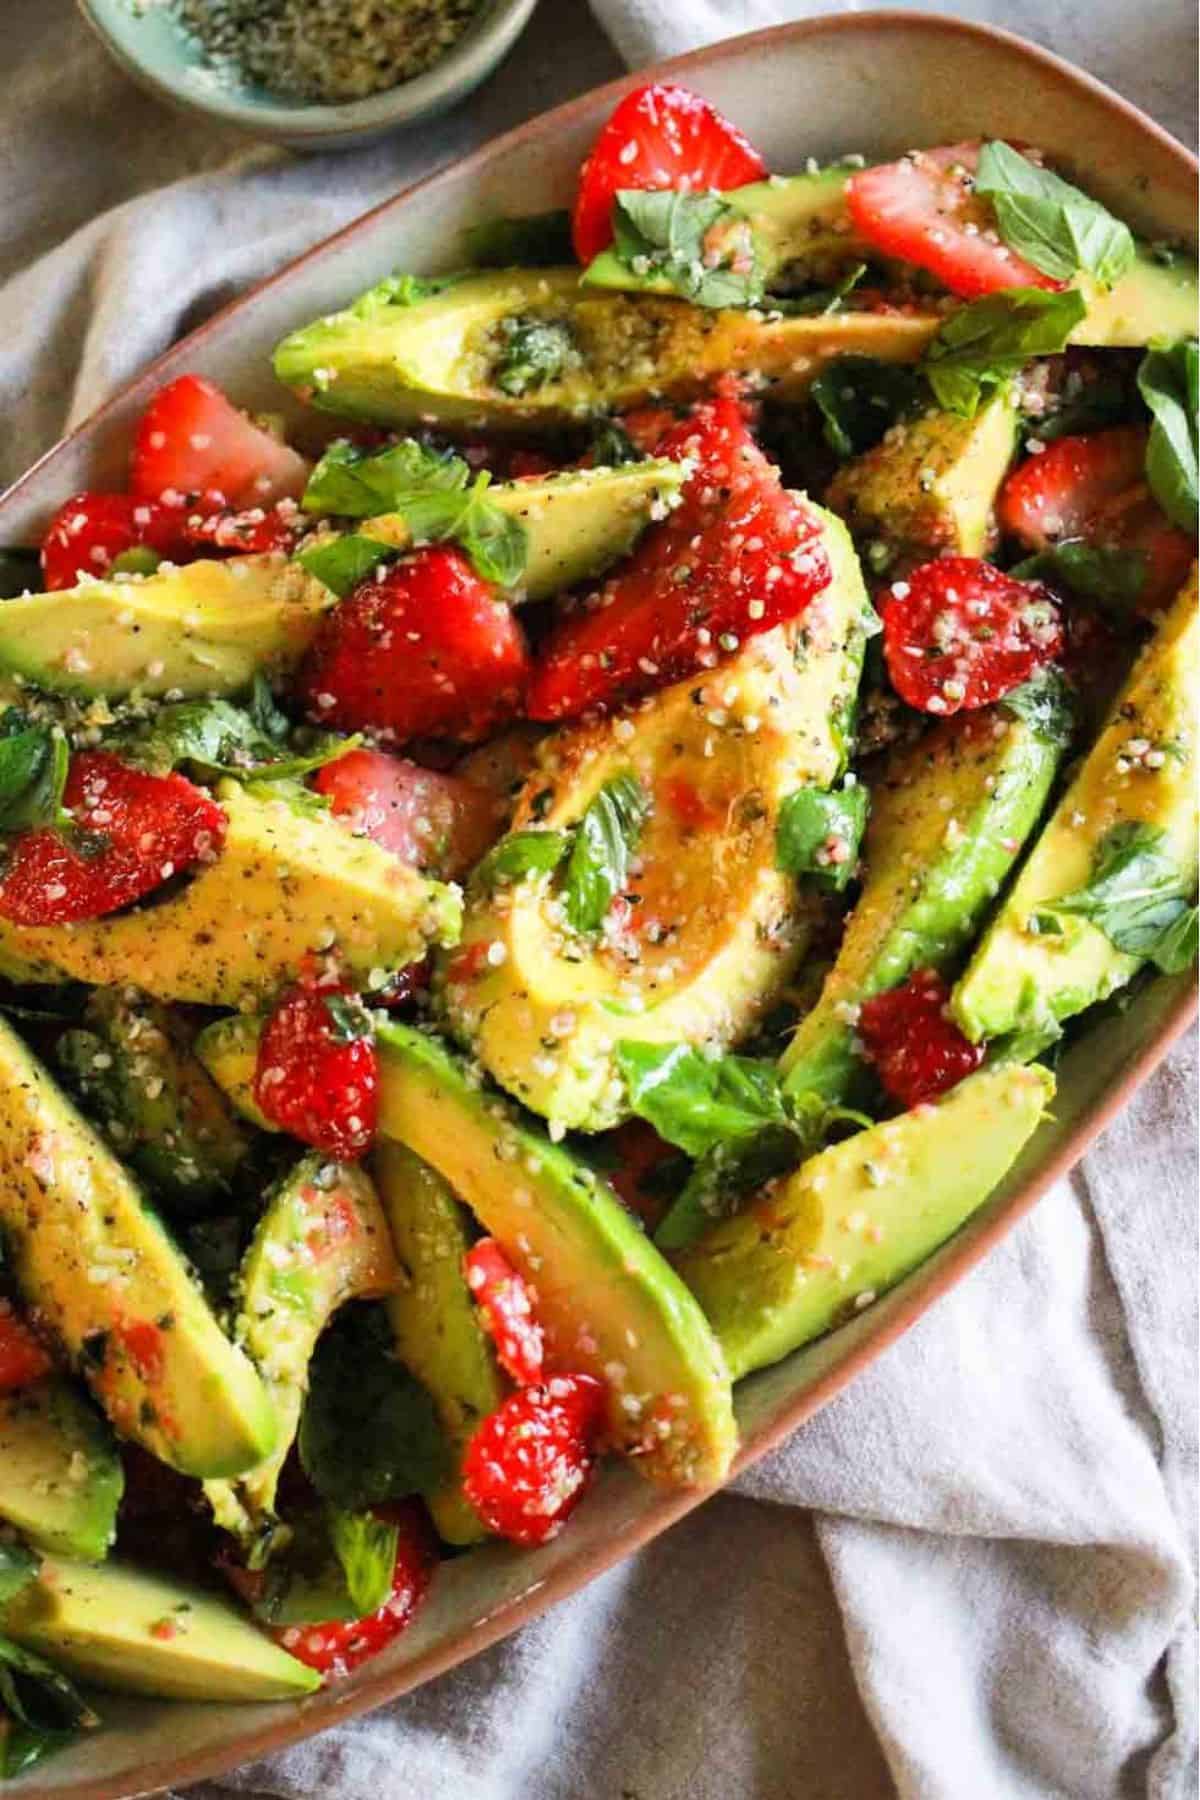 Easy vegetarian salad with strawberries, avocado, and lemon hemp dressing.